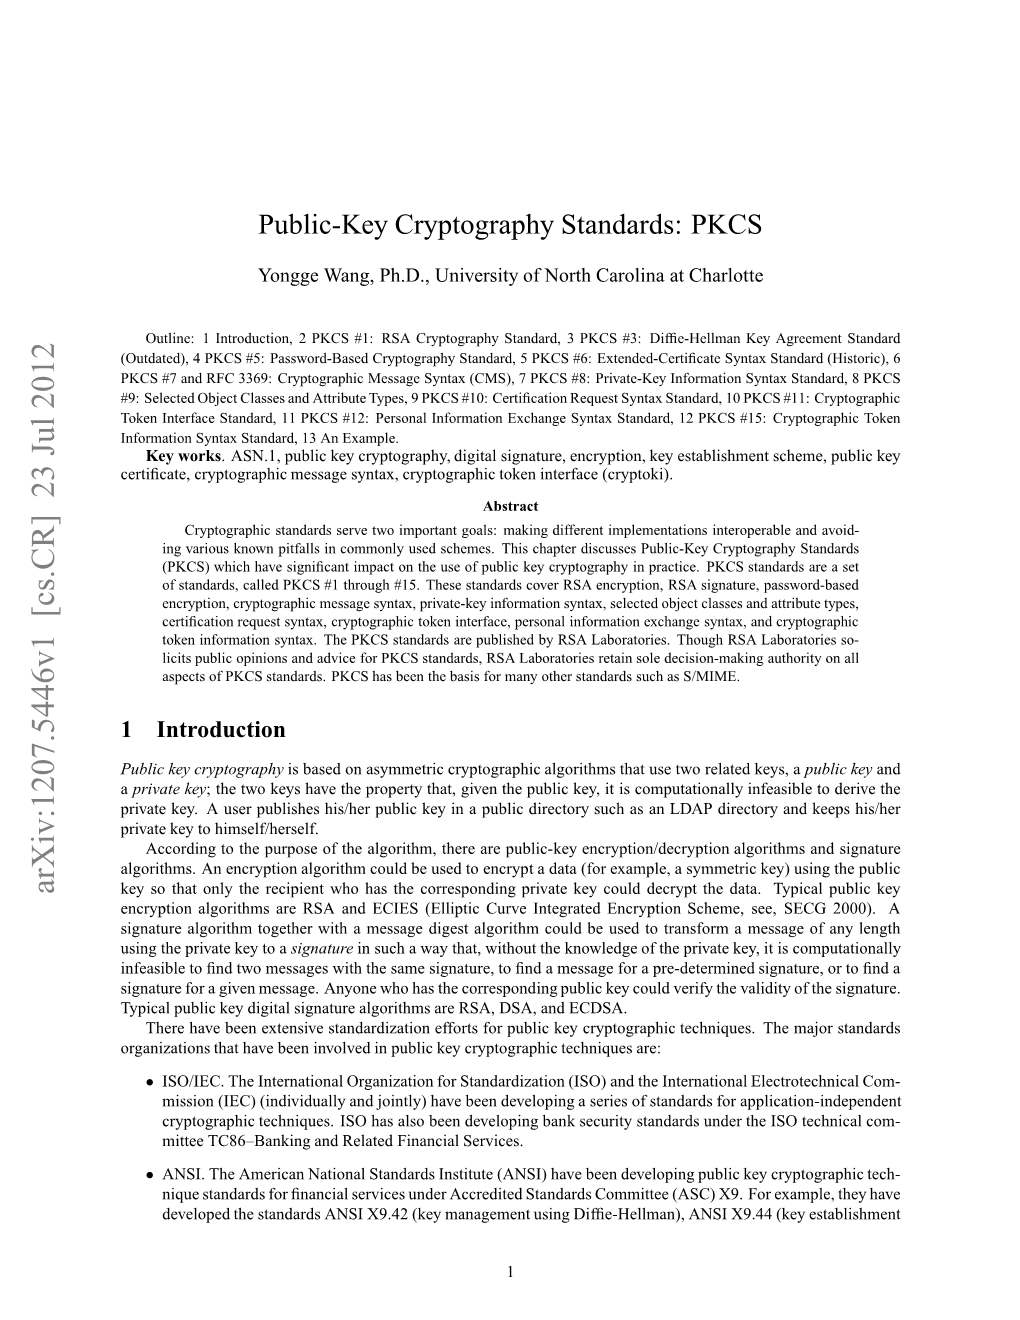 Public Key Cryptography Standards: PKCS